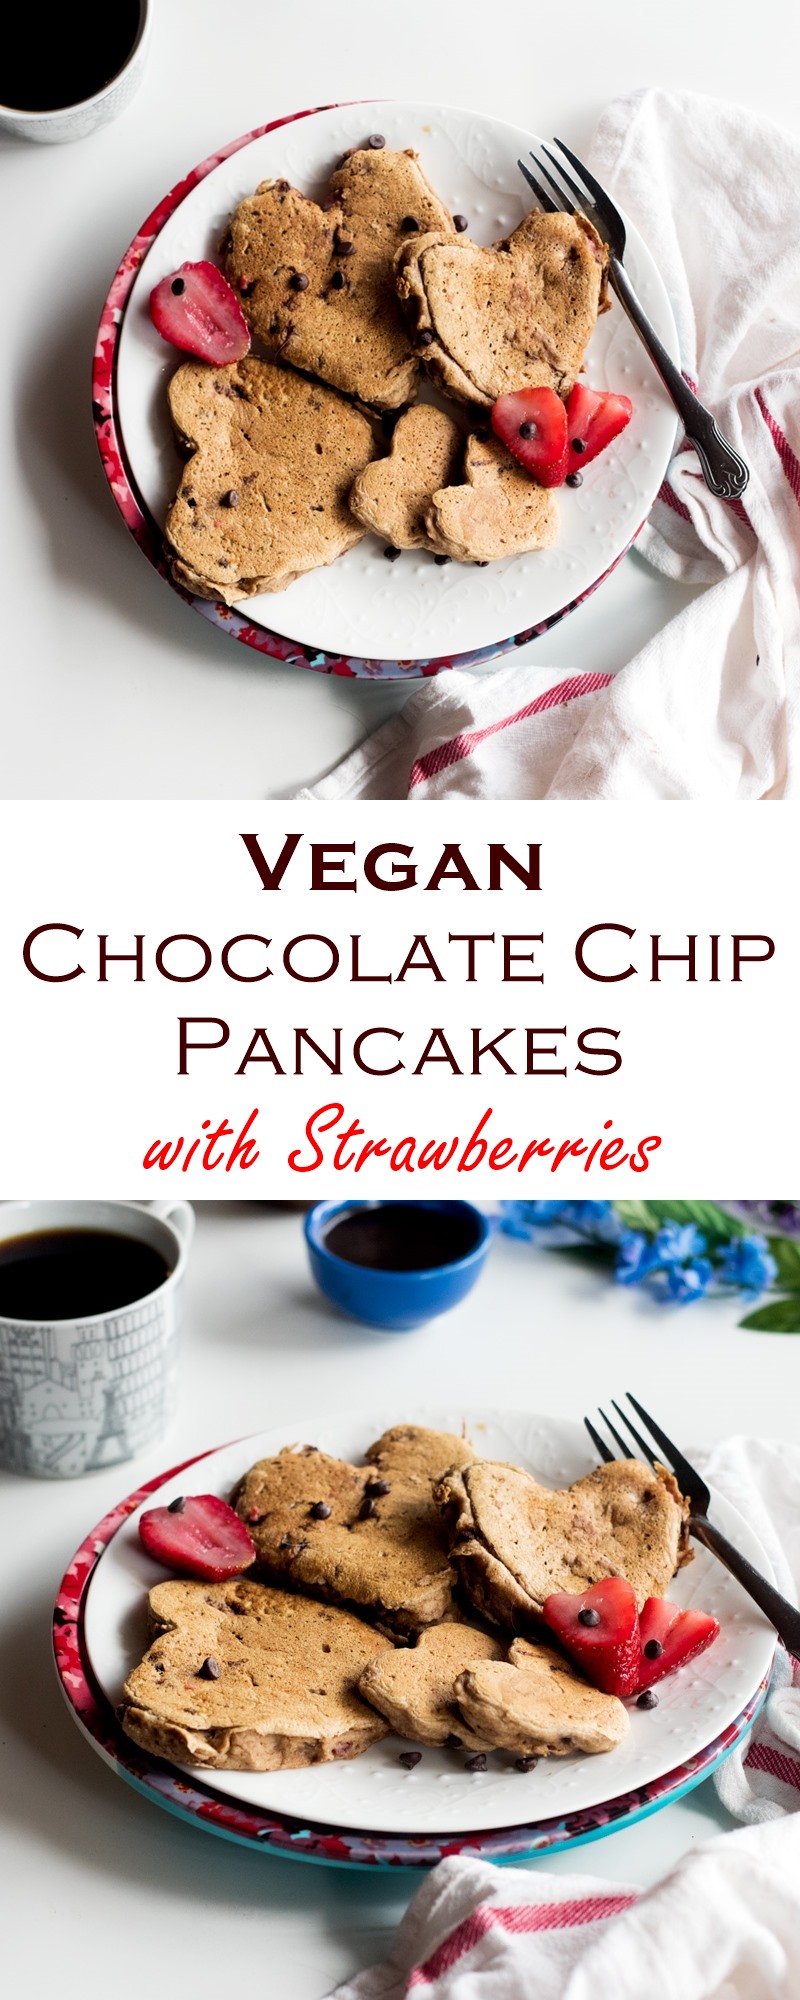 Vegan Chocolate Chip Pancakes with Strawberries Recipe 